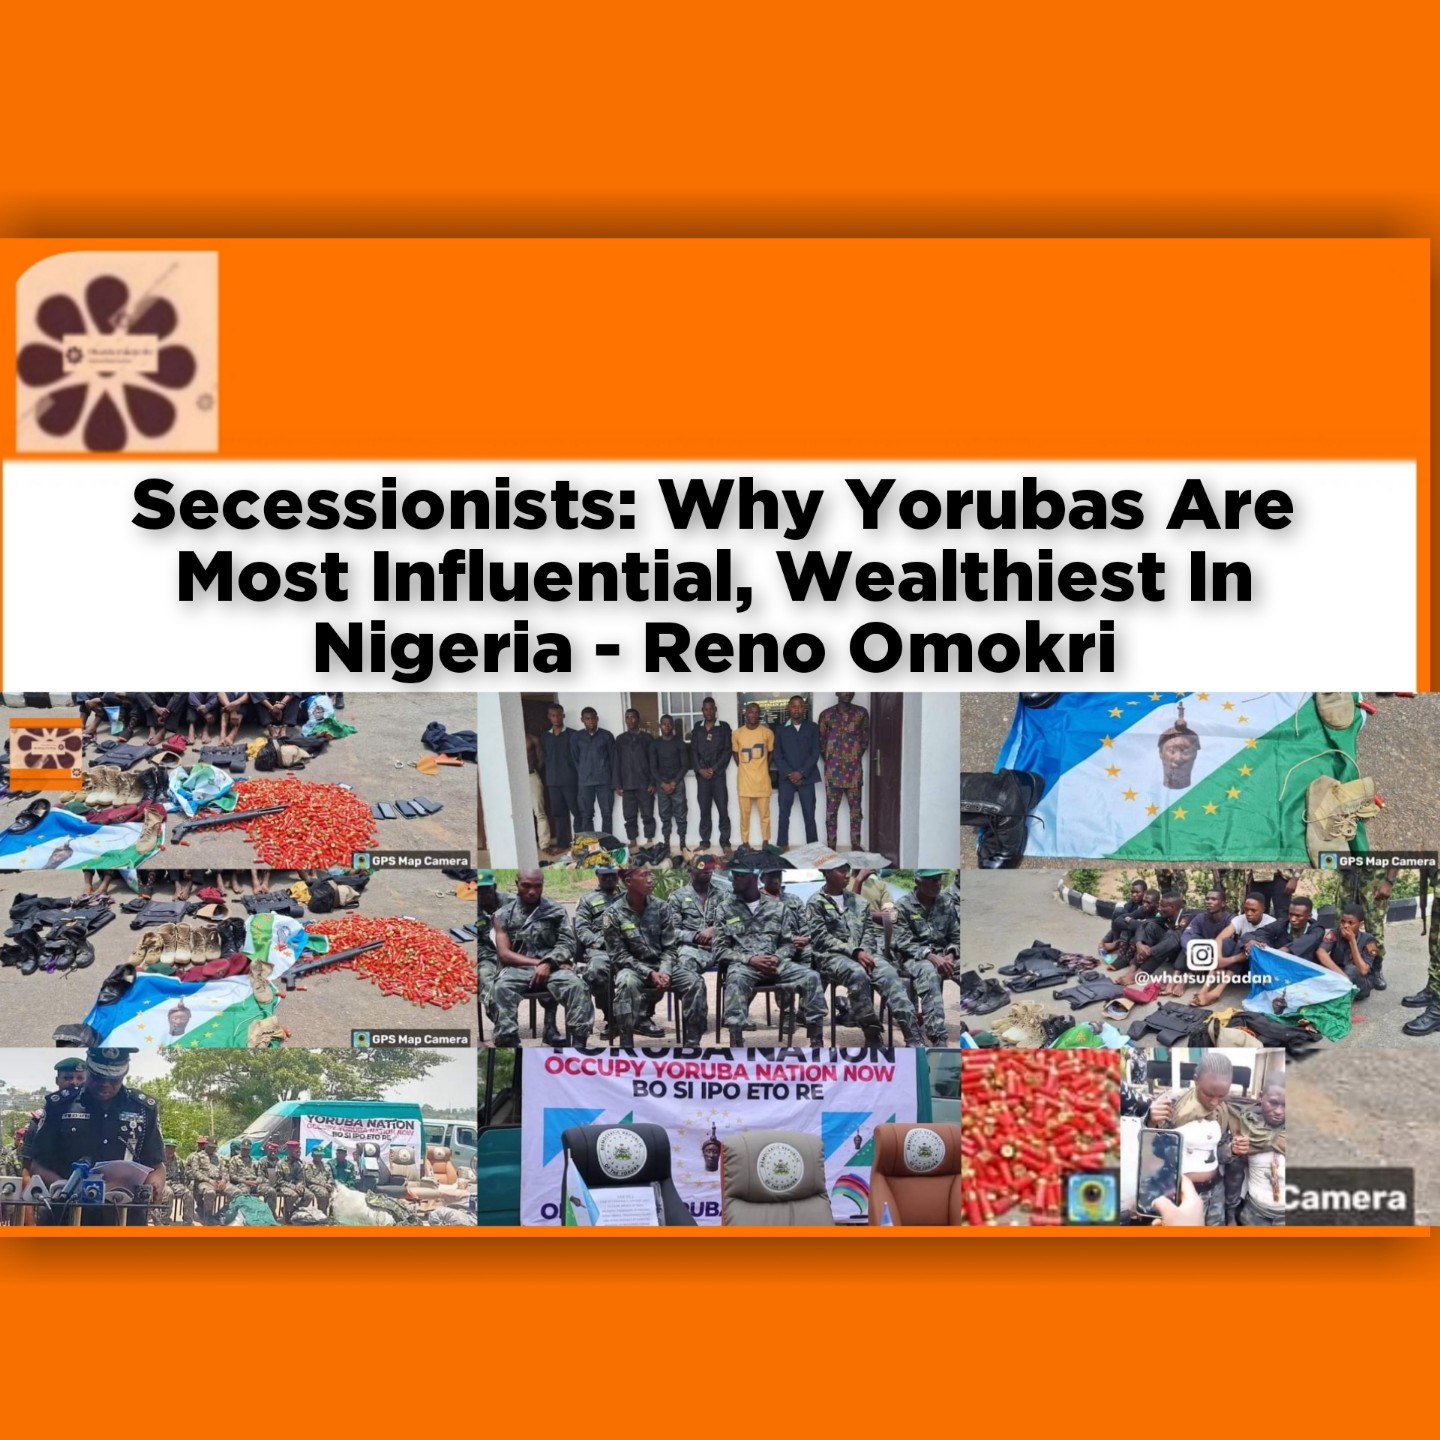 Secessionists: Why Yorubas Are Most Influential, Wealthiest In Nigeria - Reno Omokri ~ OsazuwaAkonedo David Ugolor